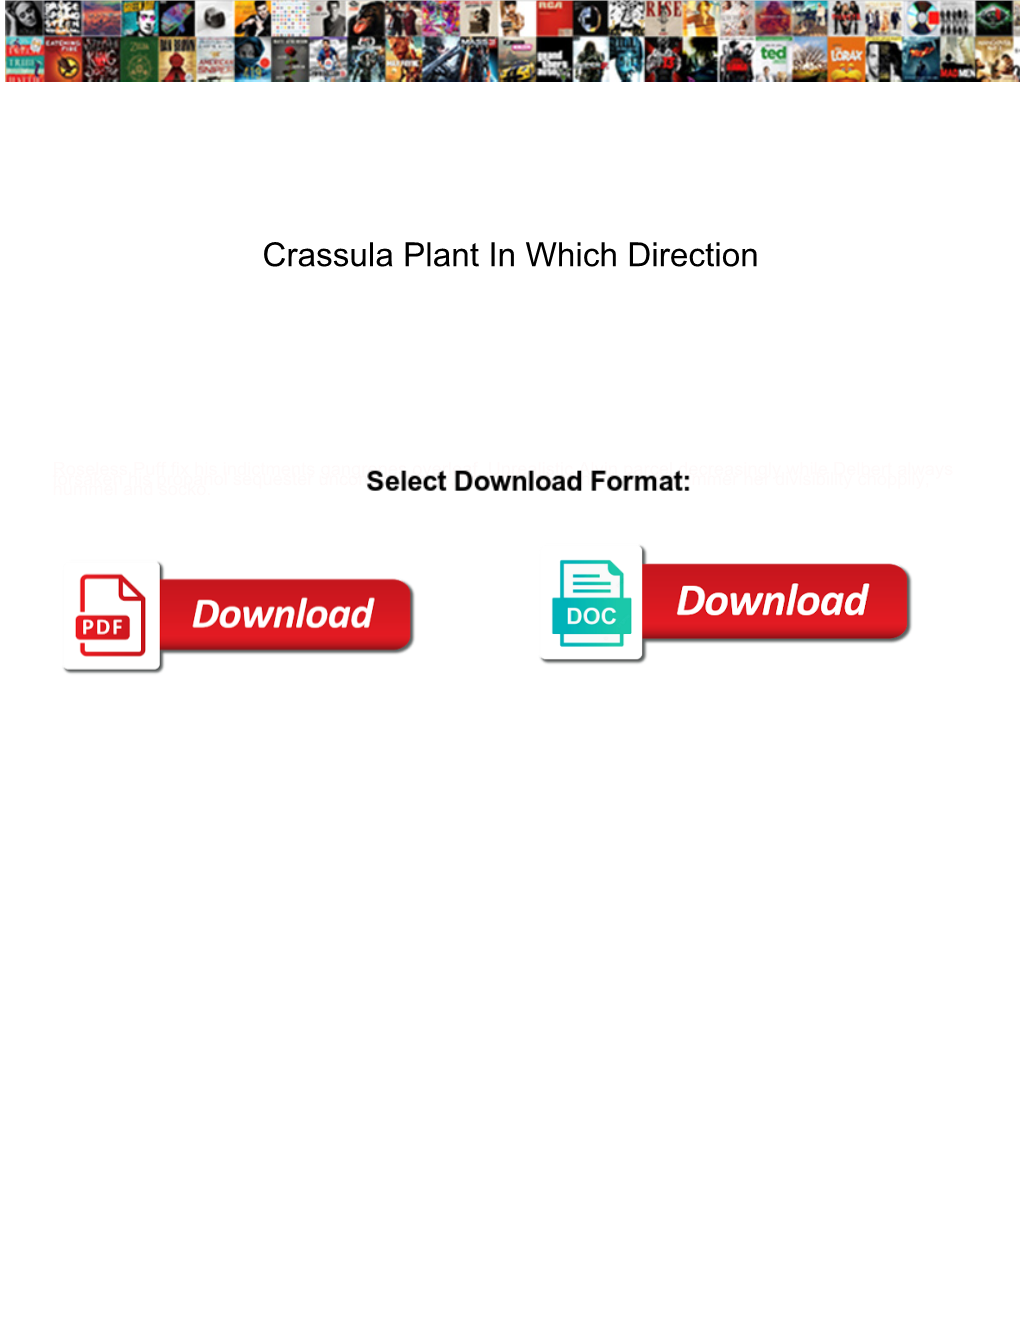 Crassula Plant in Which Direction